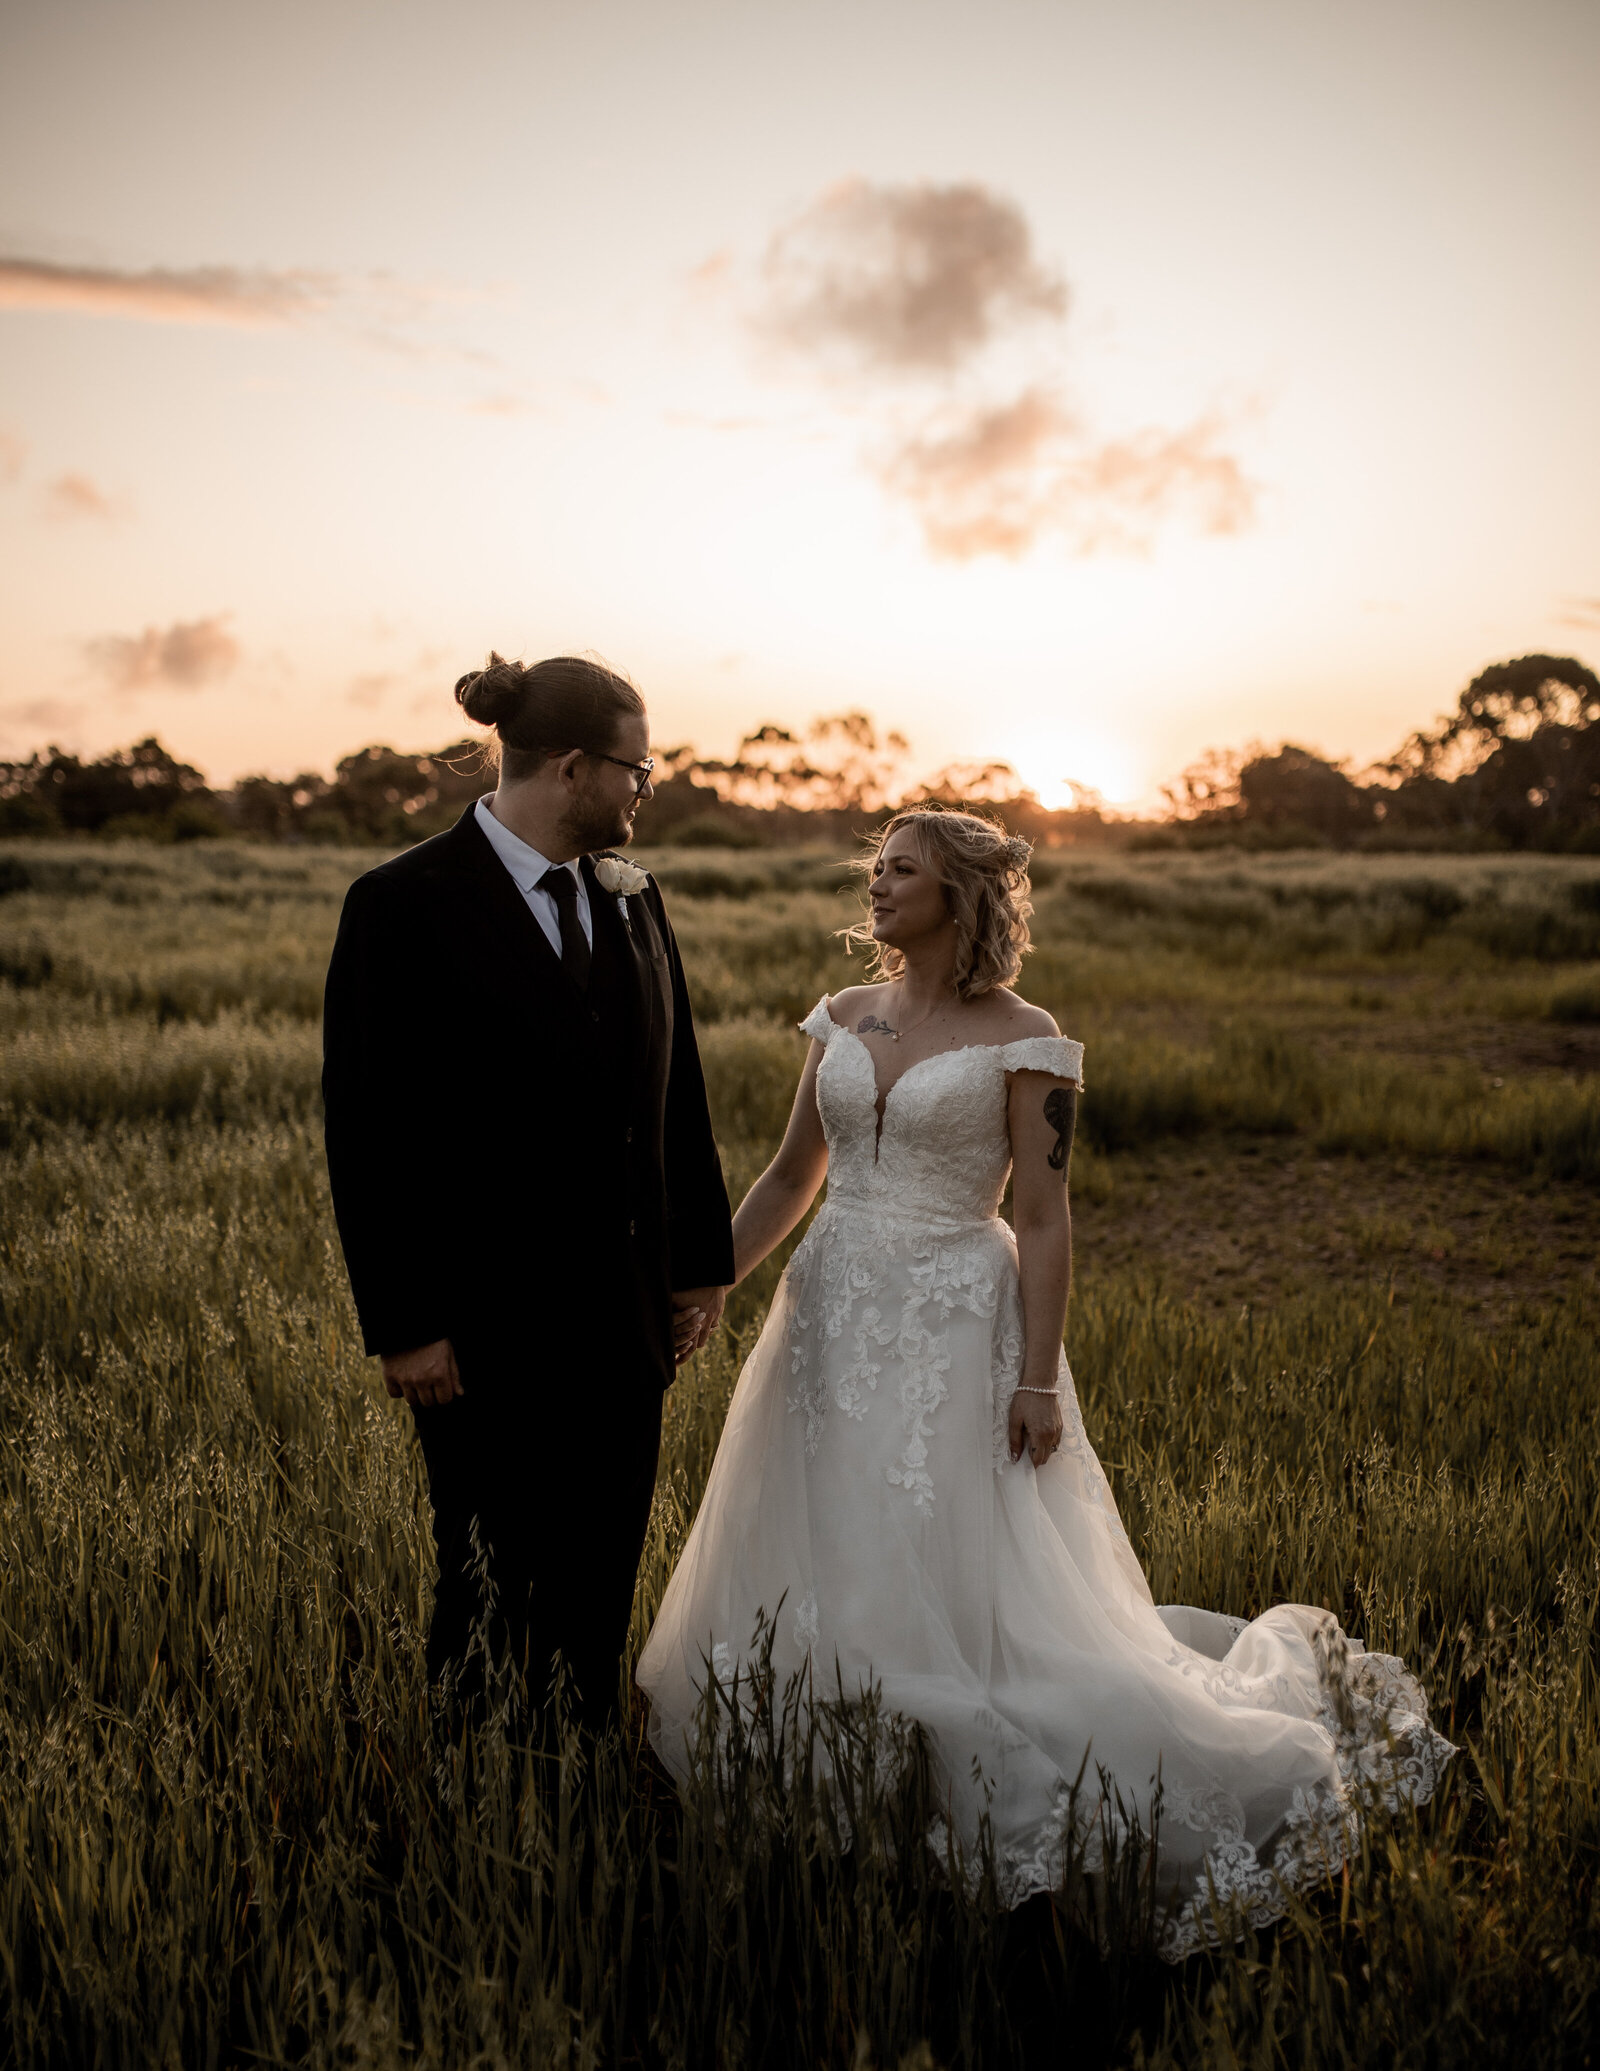 Maxine-Chris-Rexvil-Photography-Adelaide-Wedding-Photographer-717